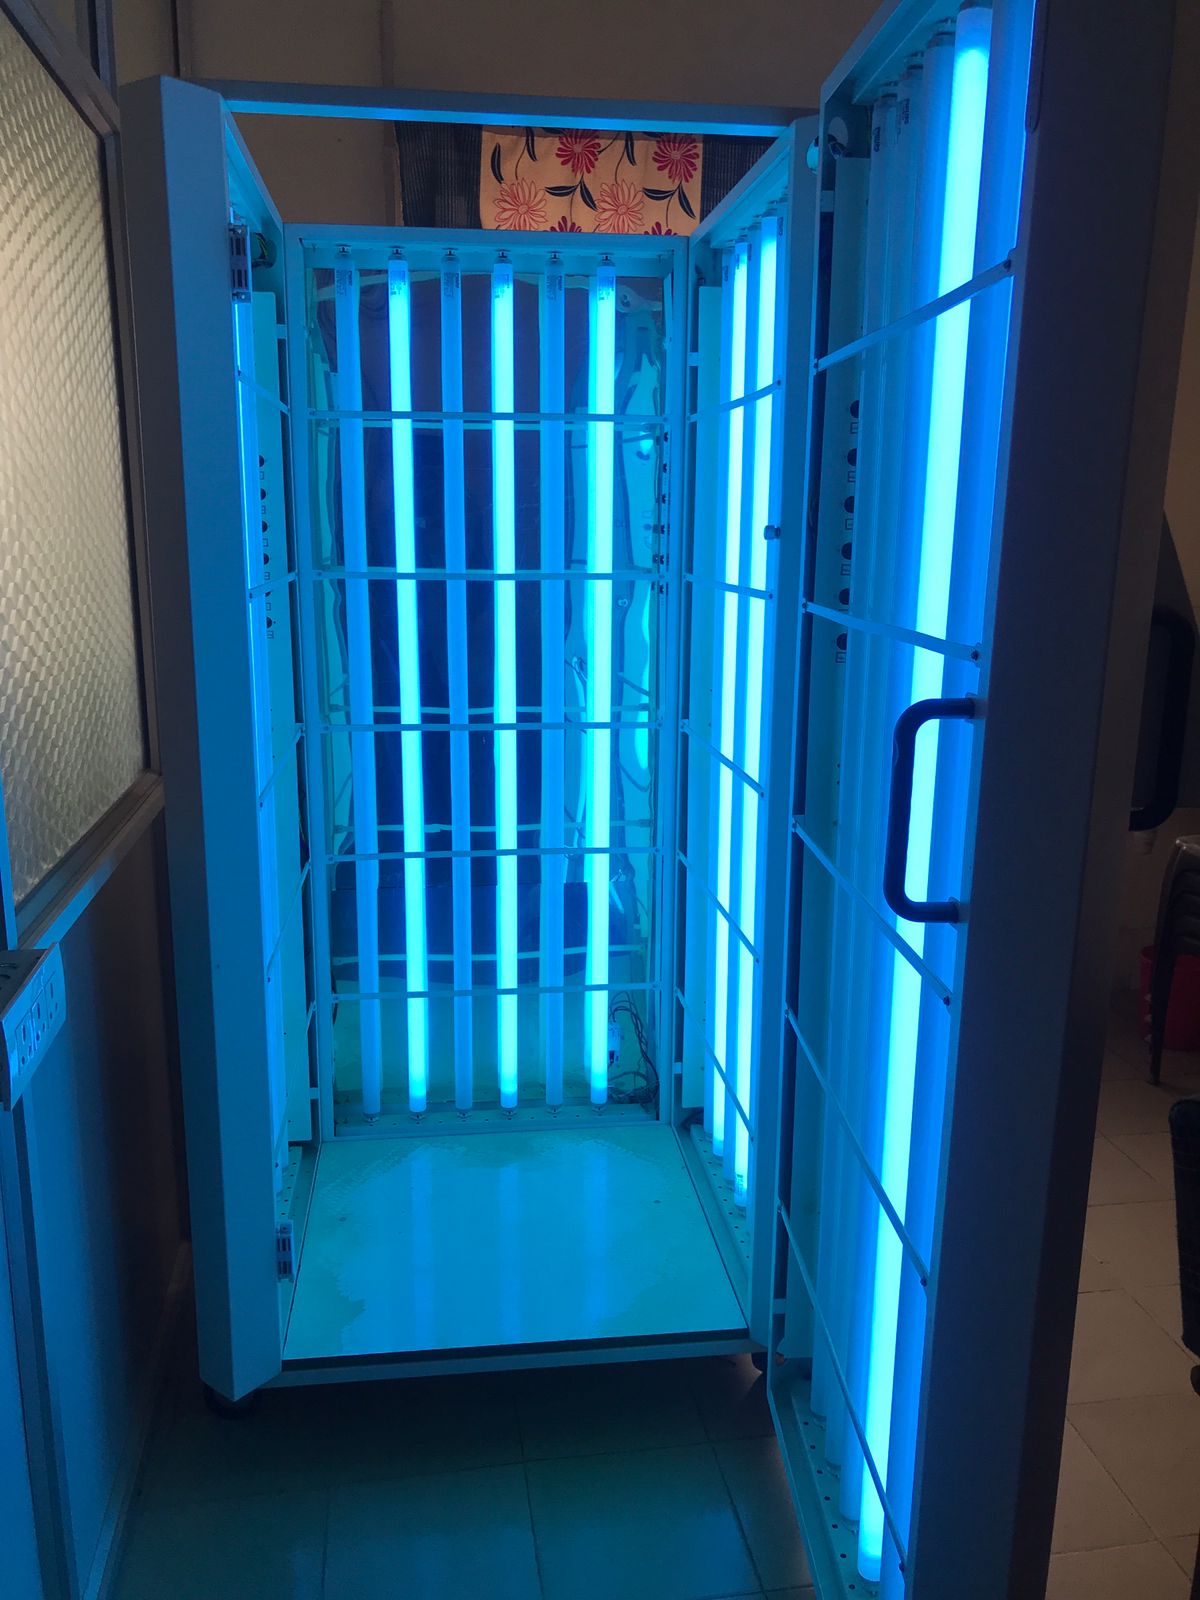 UV light therapy